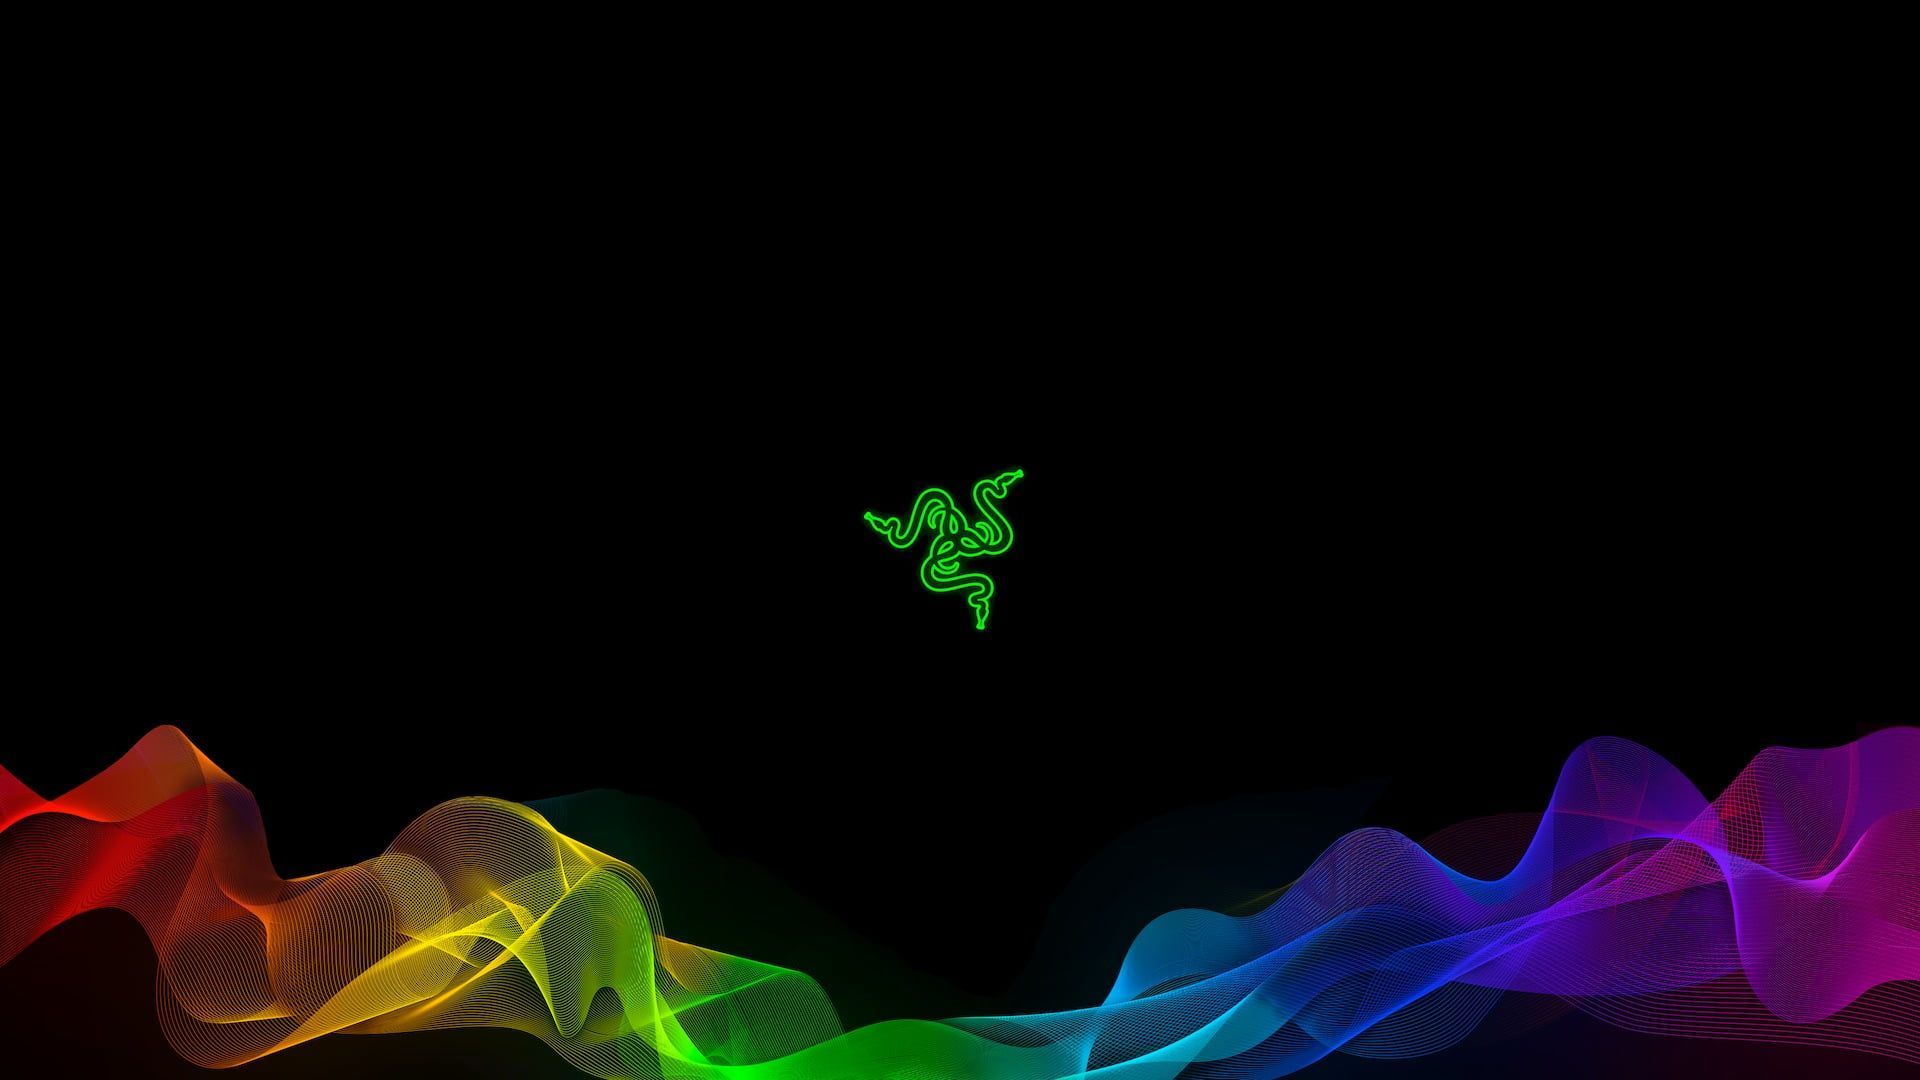  Razer Hintergrundbild 1920x1080. Razer logo #Razer Razer Inc. #brand #logo #logotype #colorful P # wallpaper #hdwallpaper #desktopk wallpaper for pc, Apple logo wallpaper, Razer